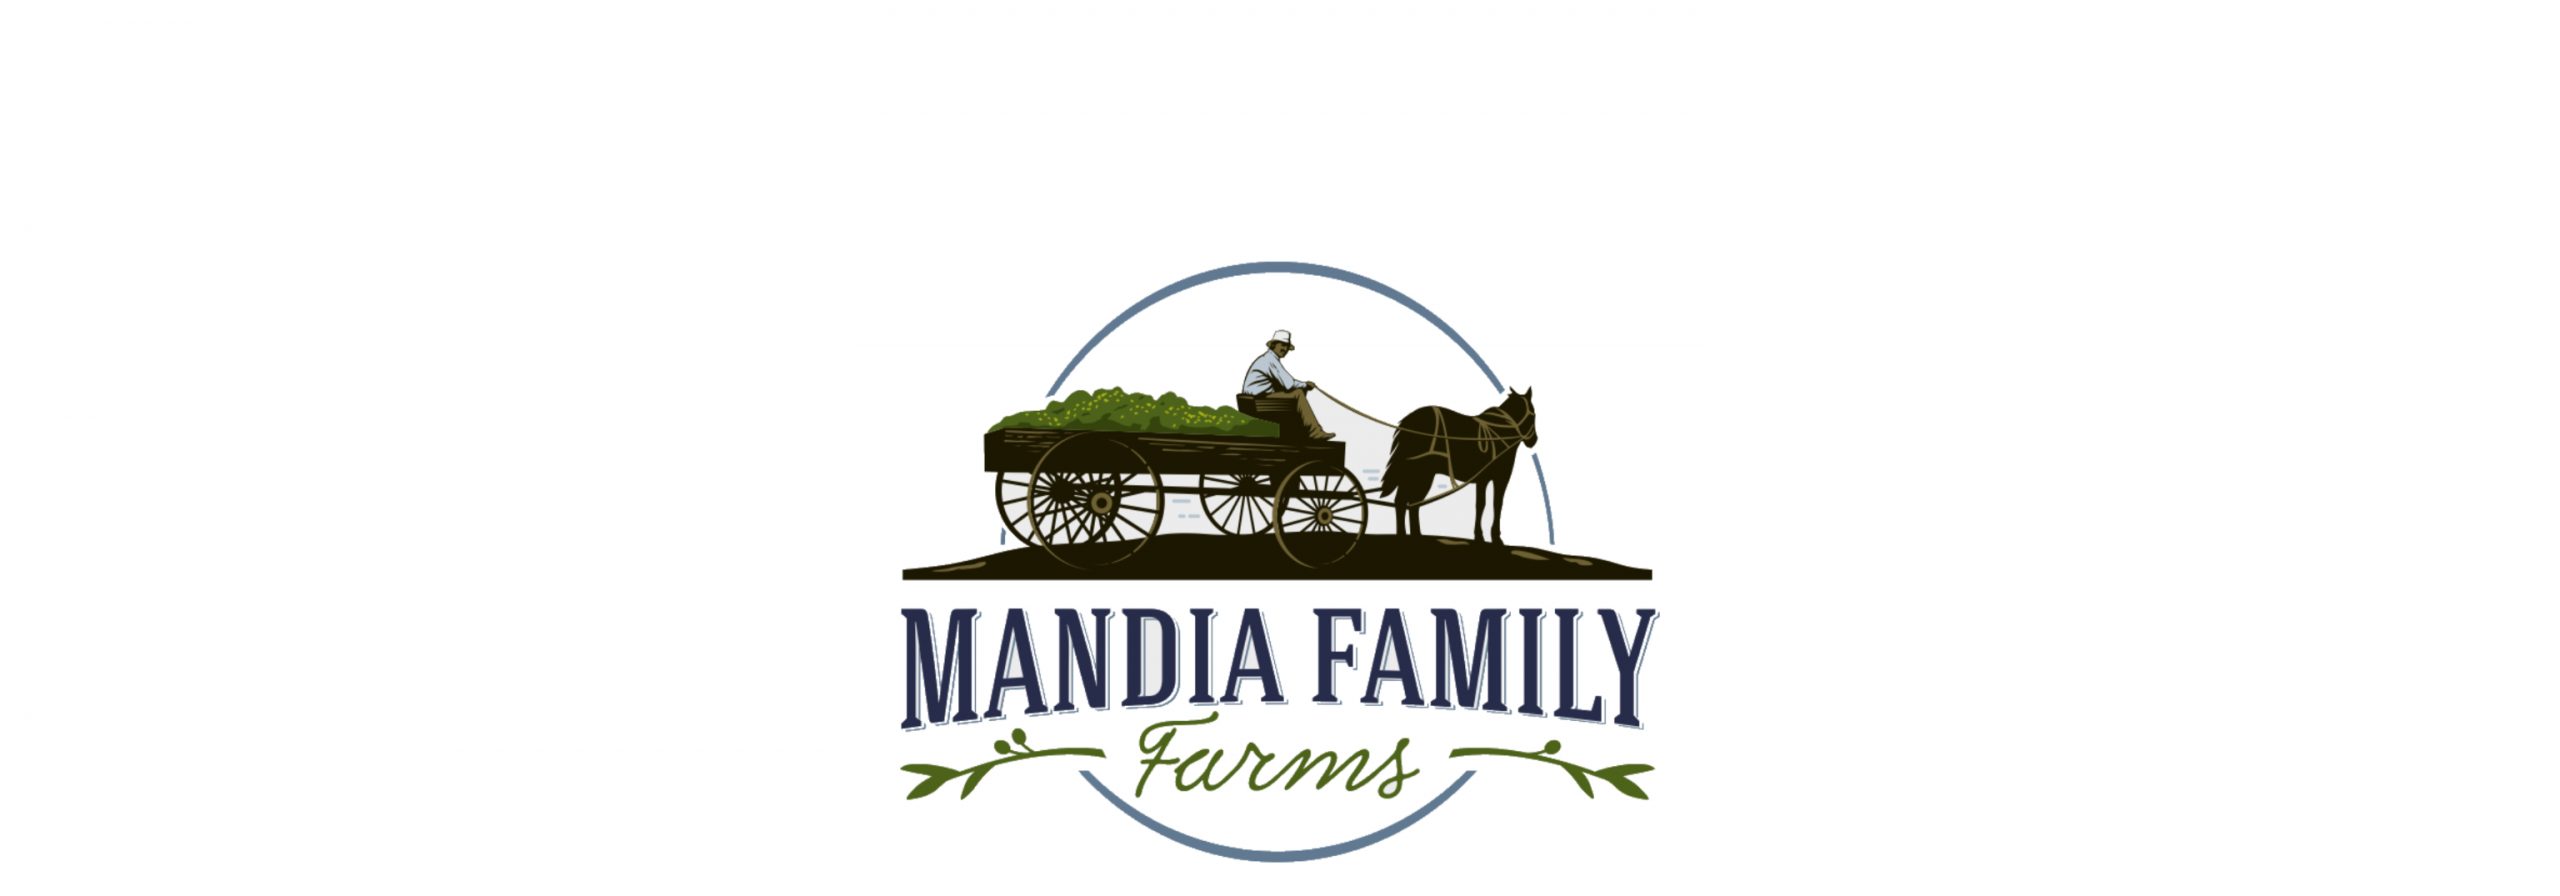 Mandia Family Farms background image